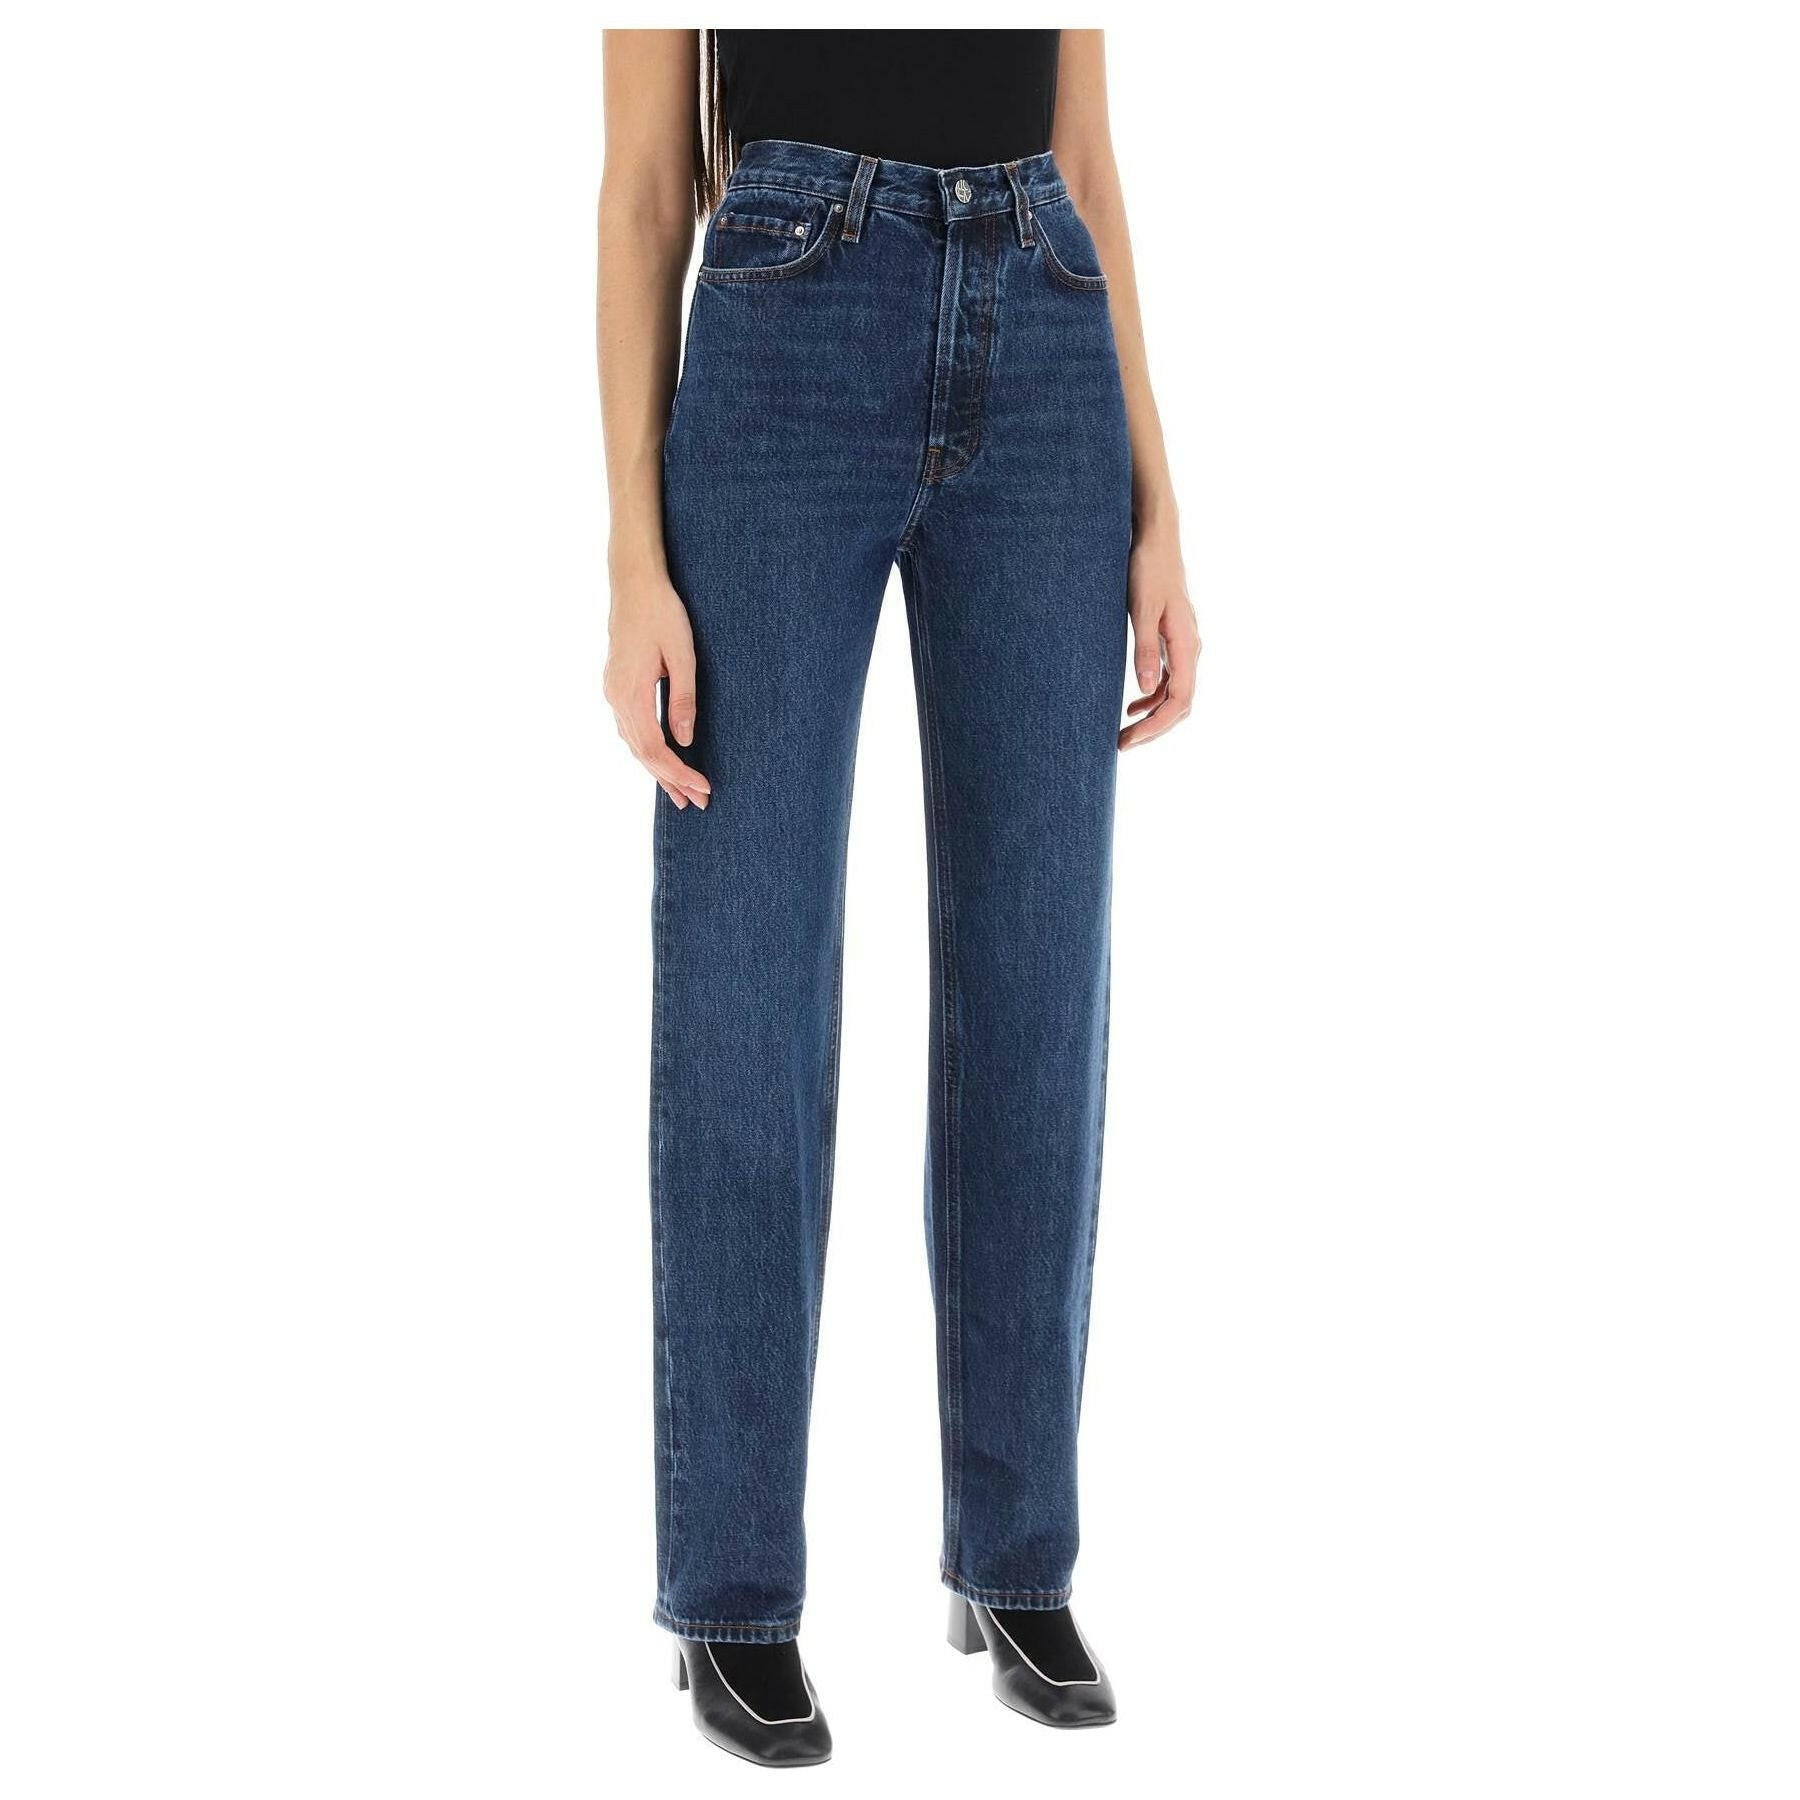 Organic Denim Classic Cut Full Length Jeans